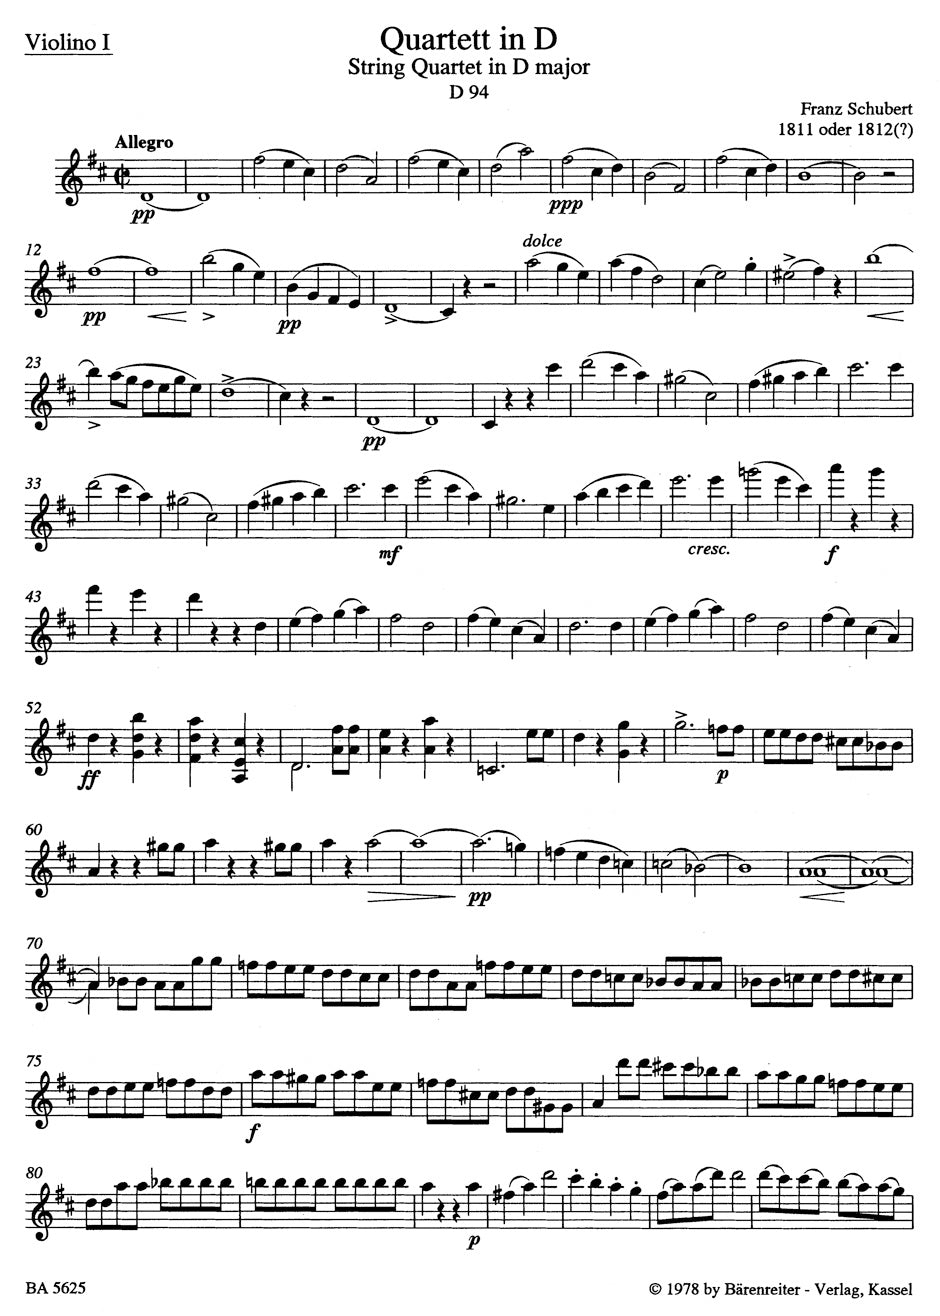 Schubert String Quartets Volume 1